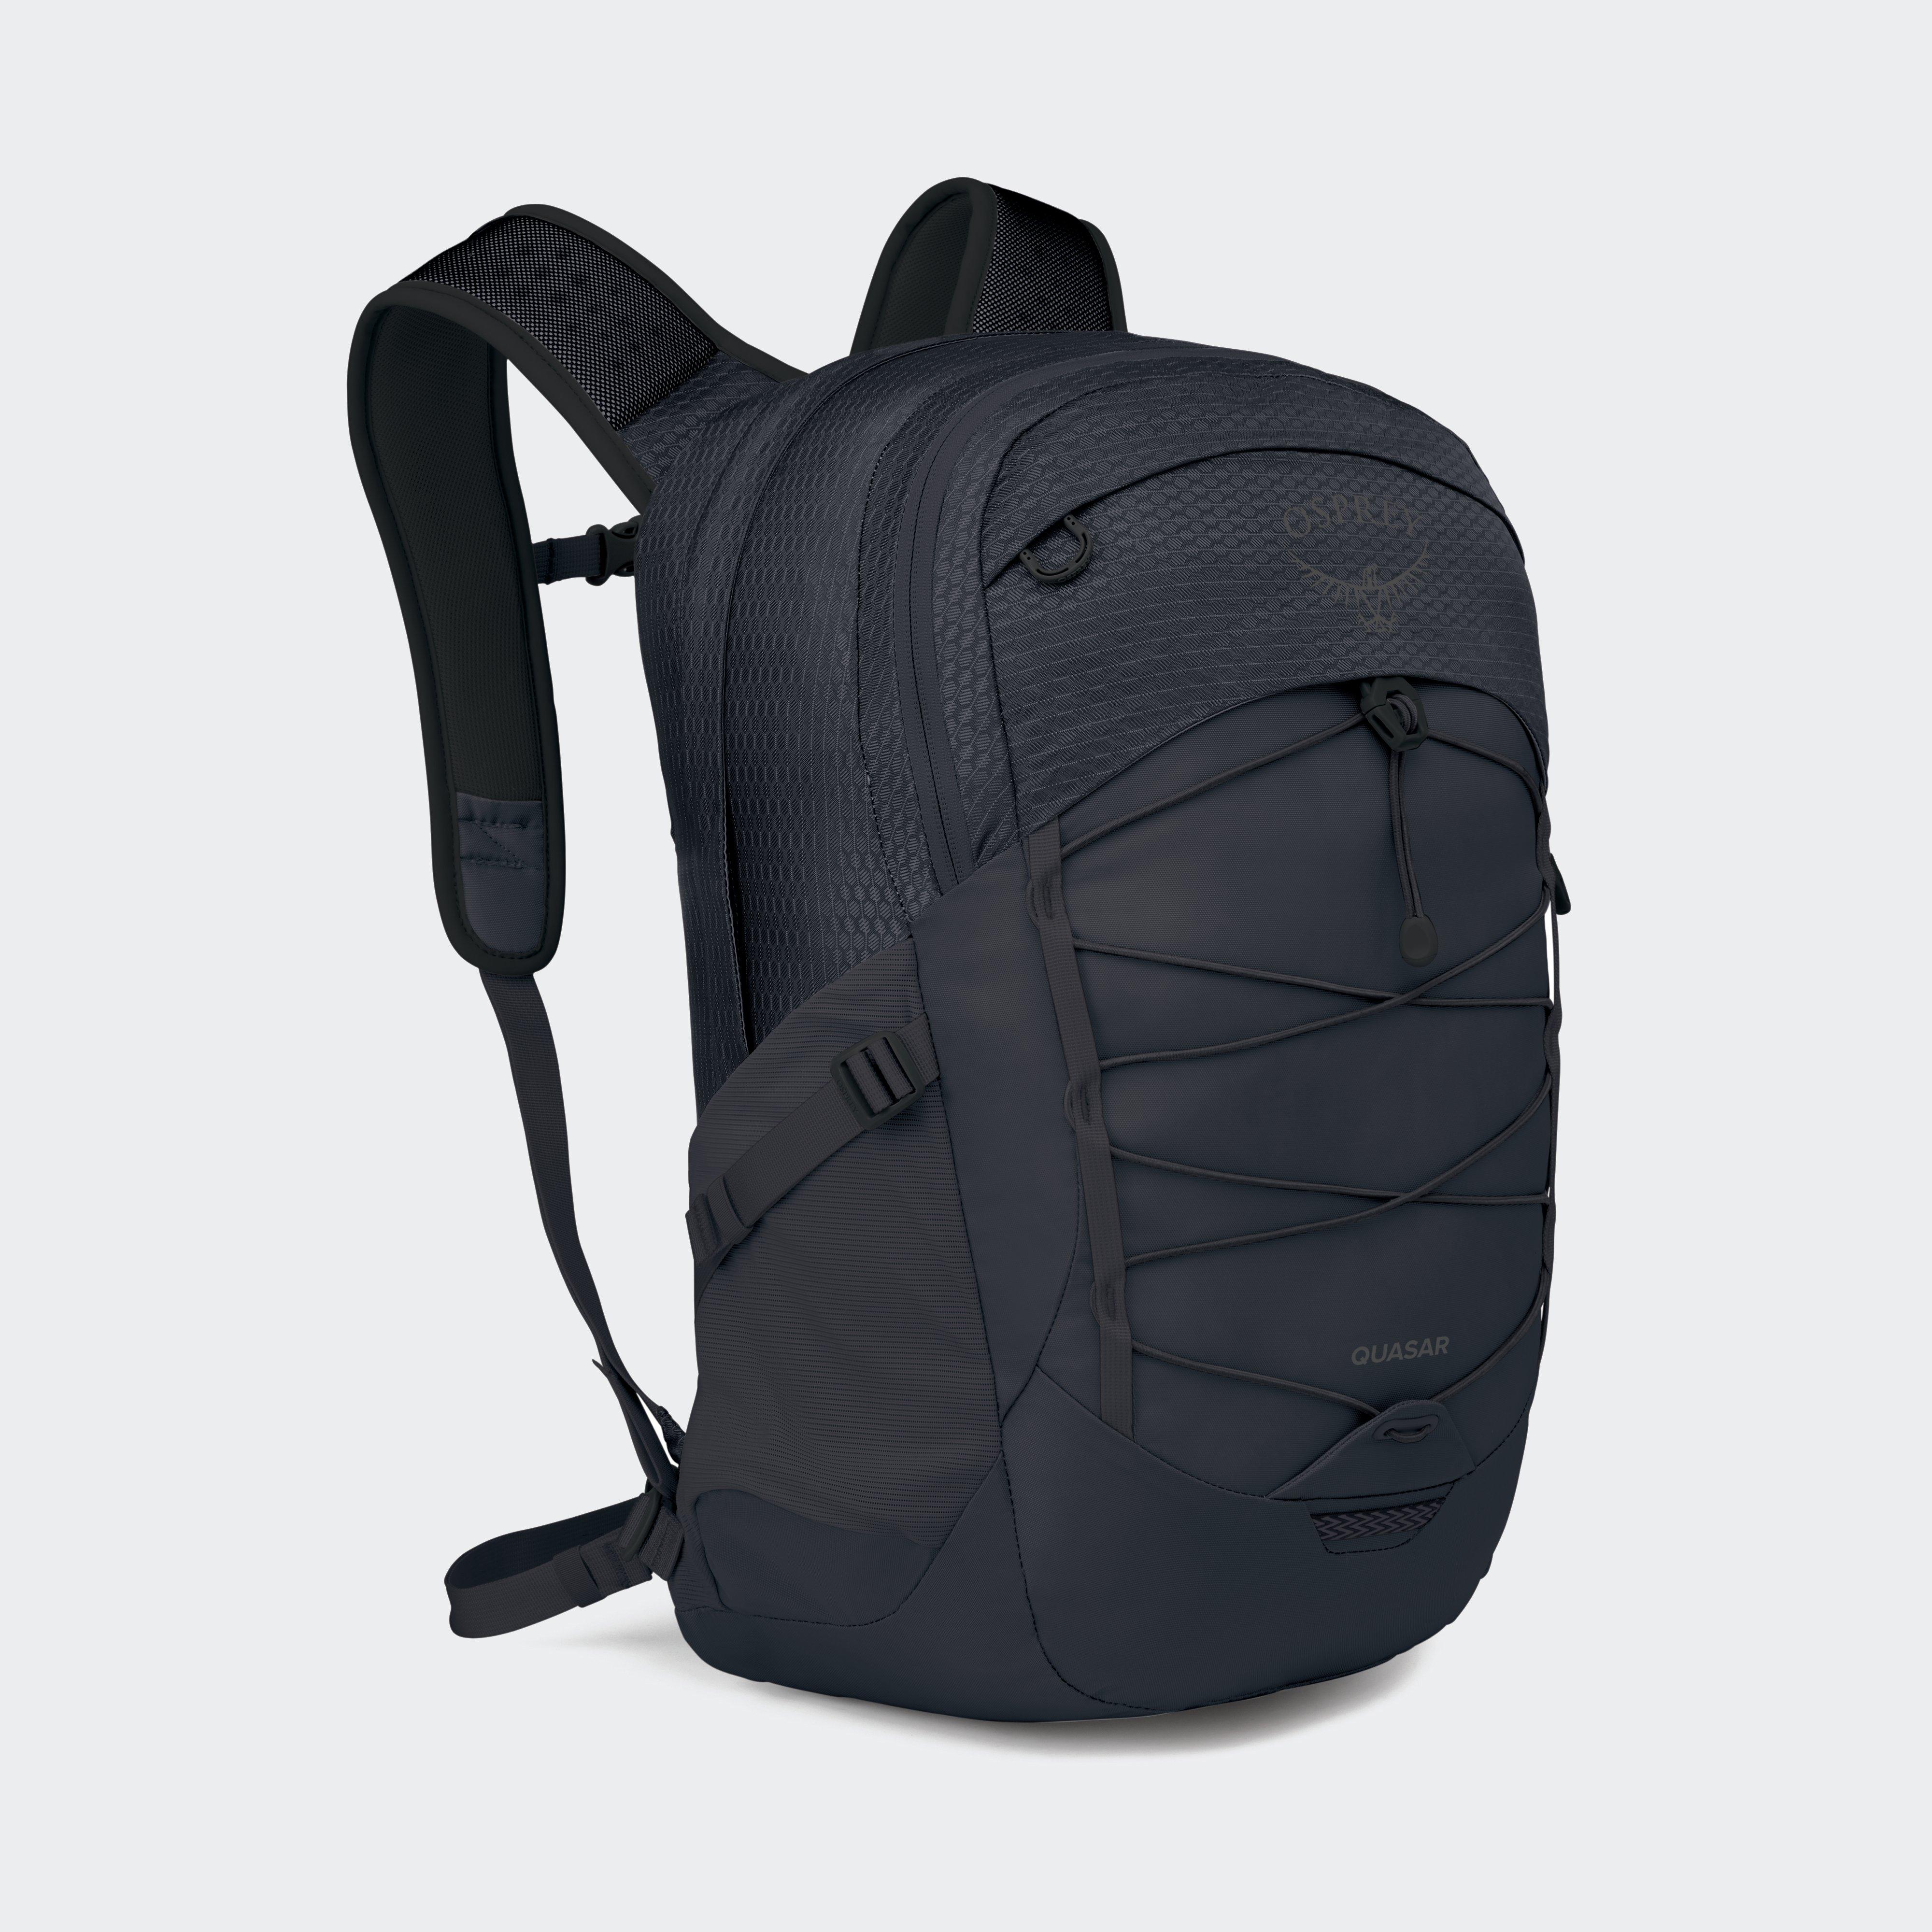  Osprey Quasar Backpack, Black